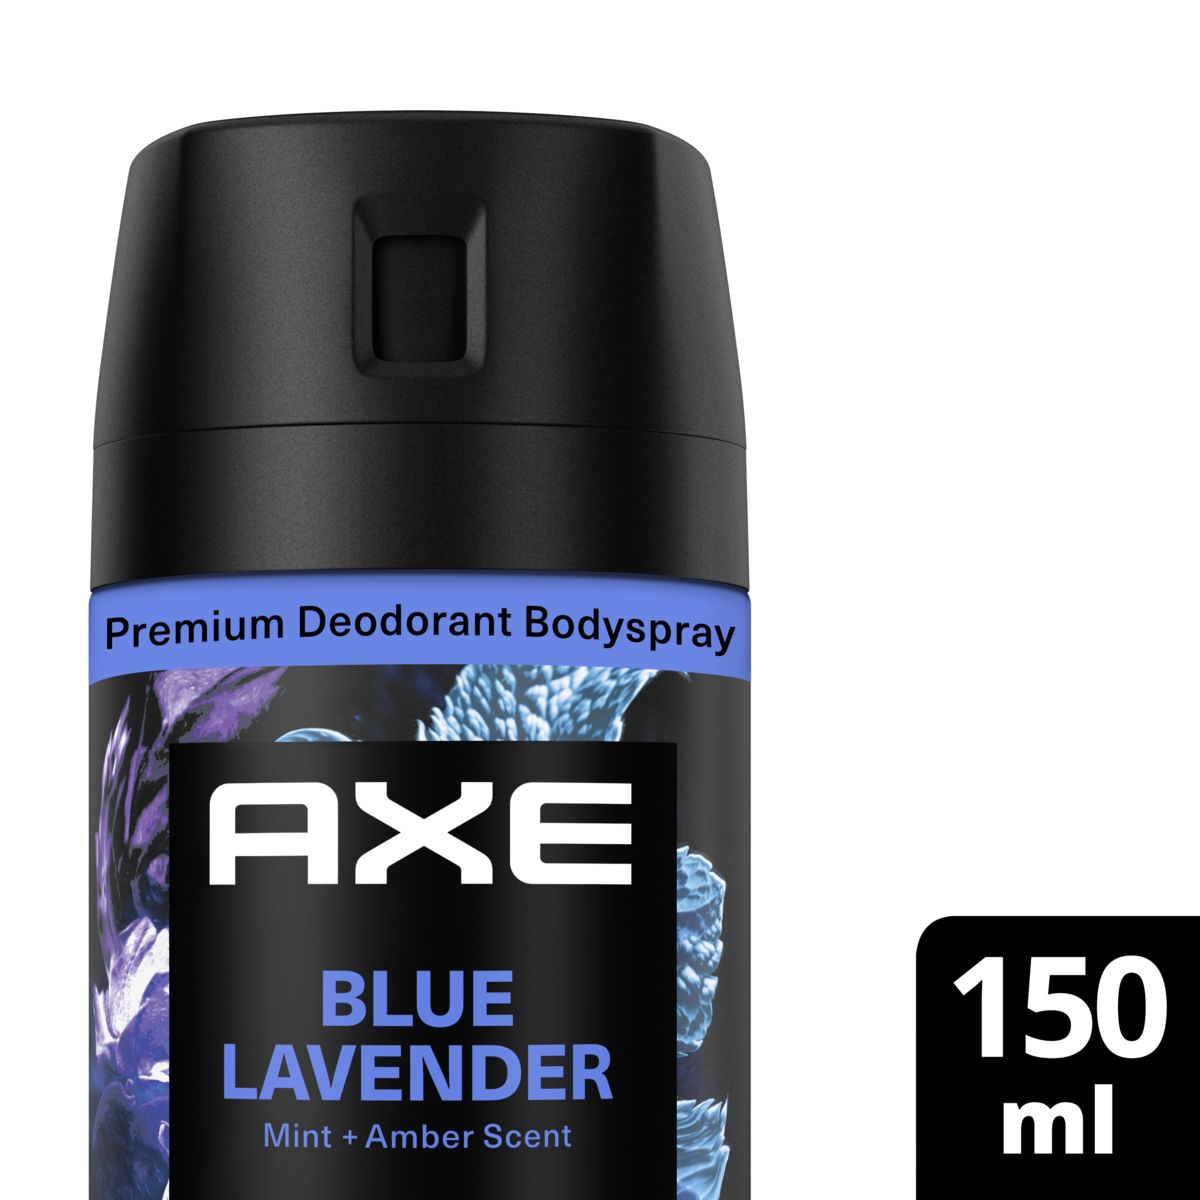 Axe Deodorant Fine Fragrance Spray Blue Lavender 150 ml